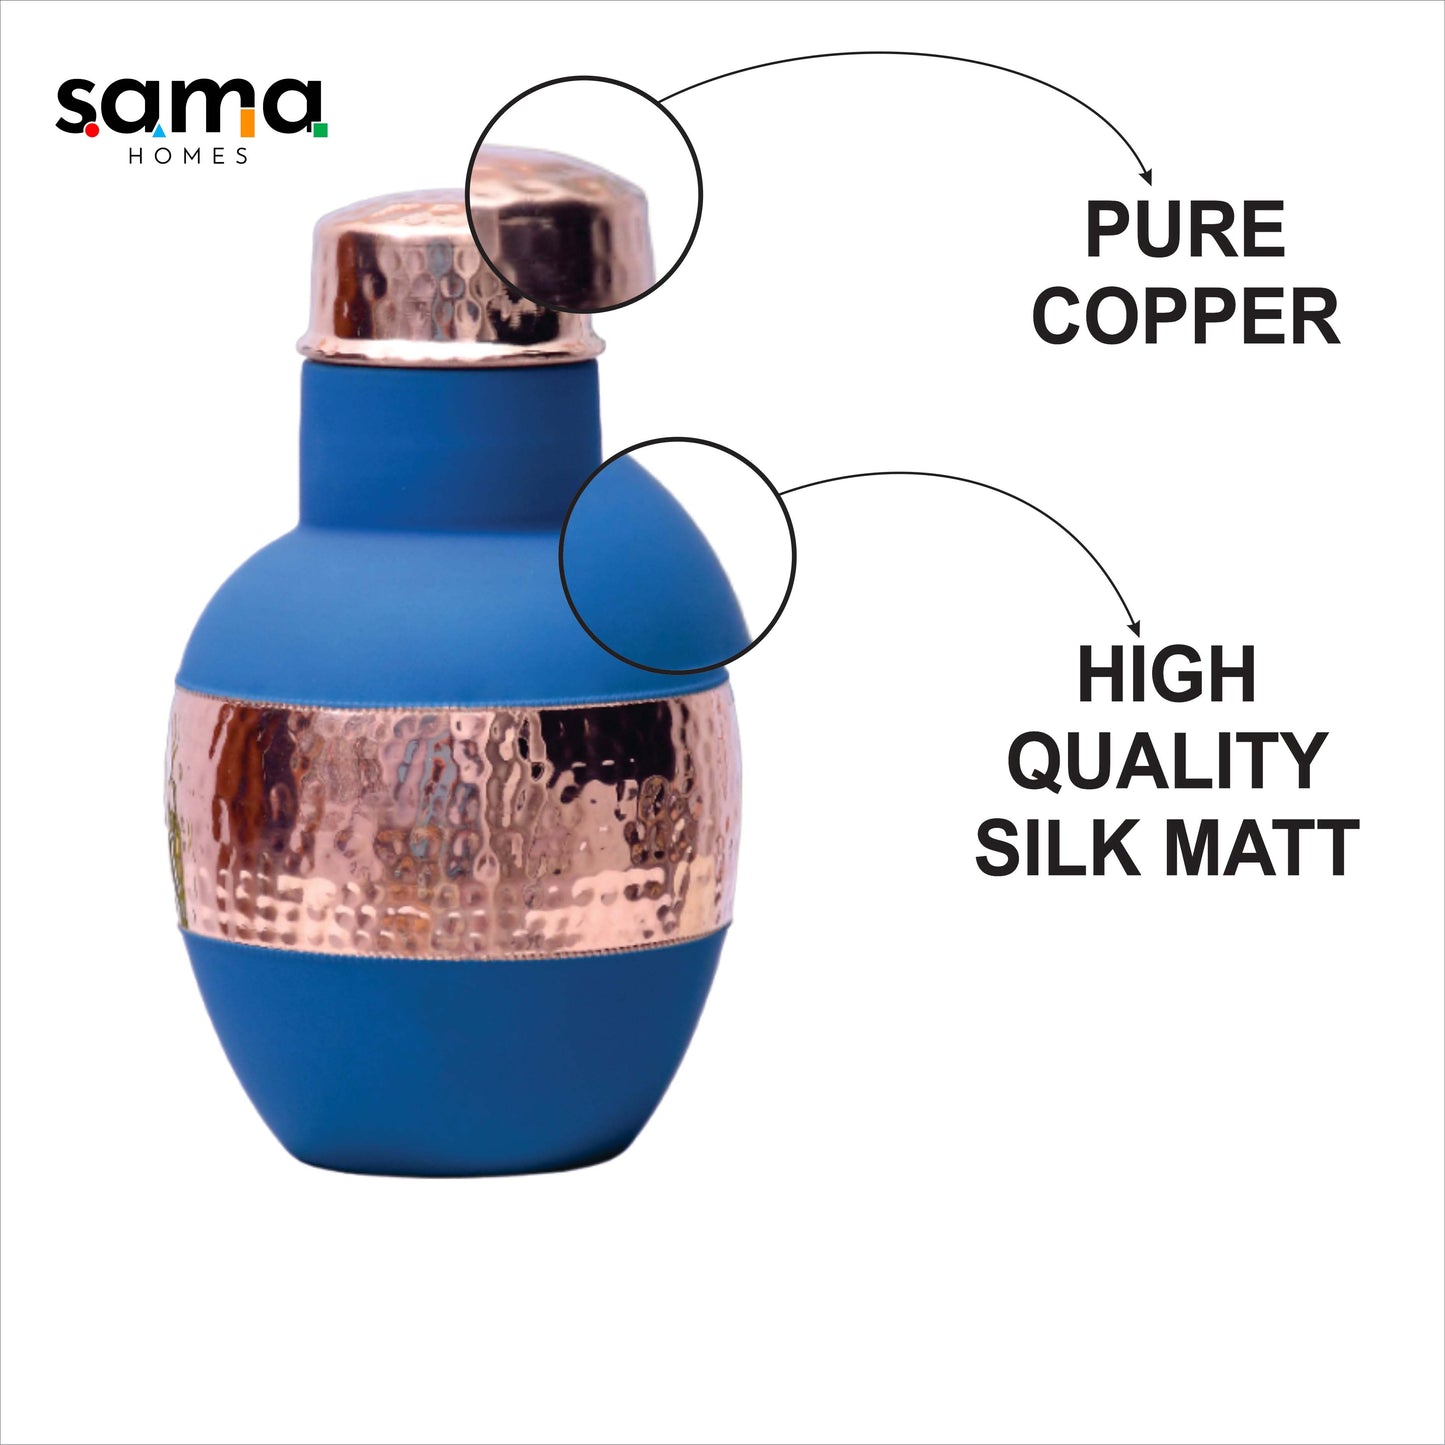 SAMA Homes - pure copper silk blue apple pot with inbuilt glass capacity 1200ml